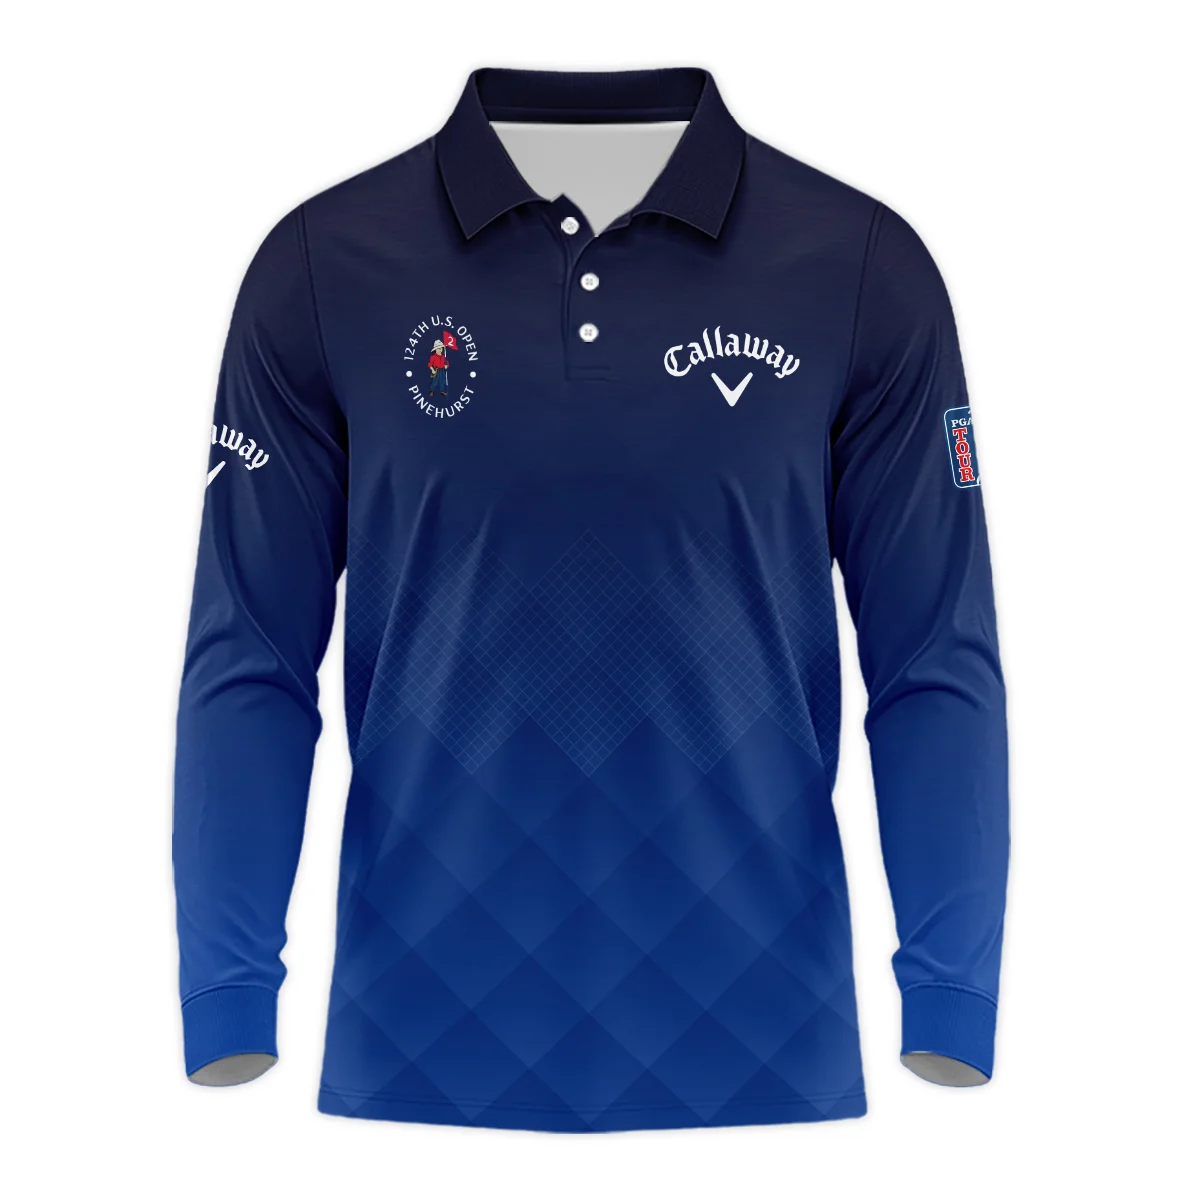 124th U.S. Open Pinehurst Callaway Dark Blue Gradient Stripes Pattern Unisex T-Shirt Style Classic T-Shirt